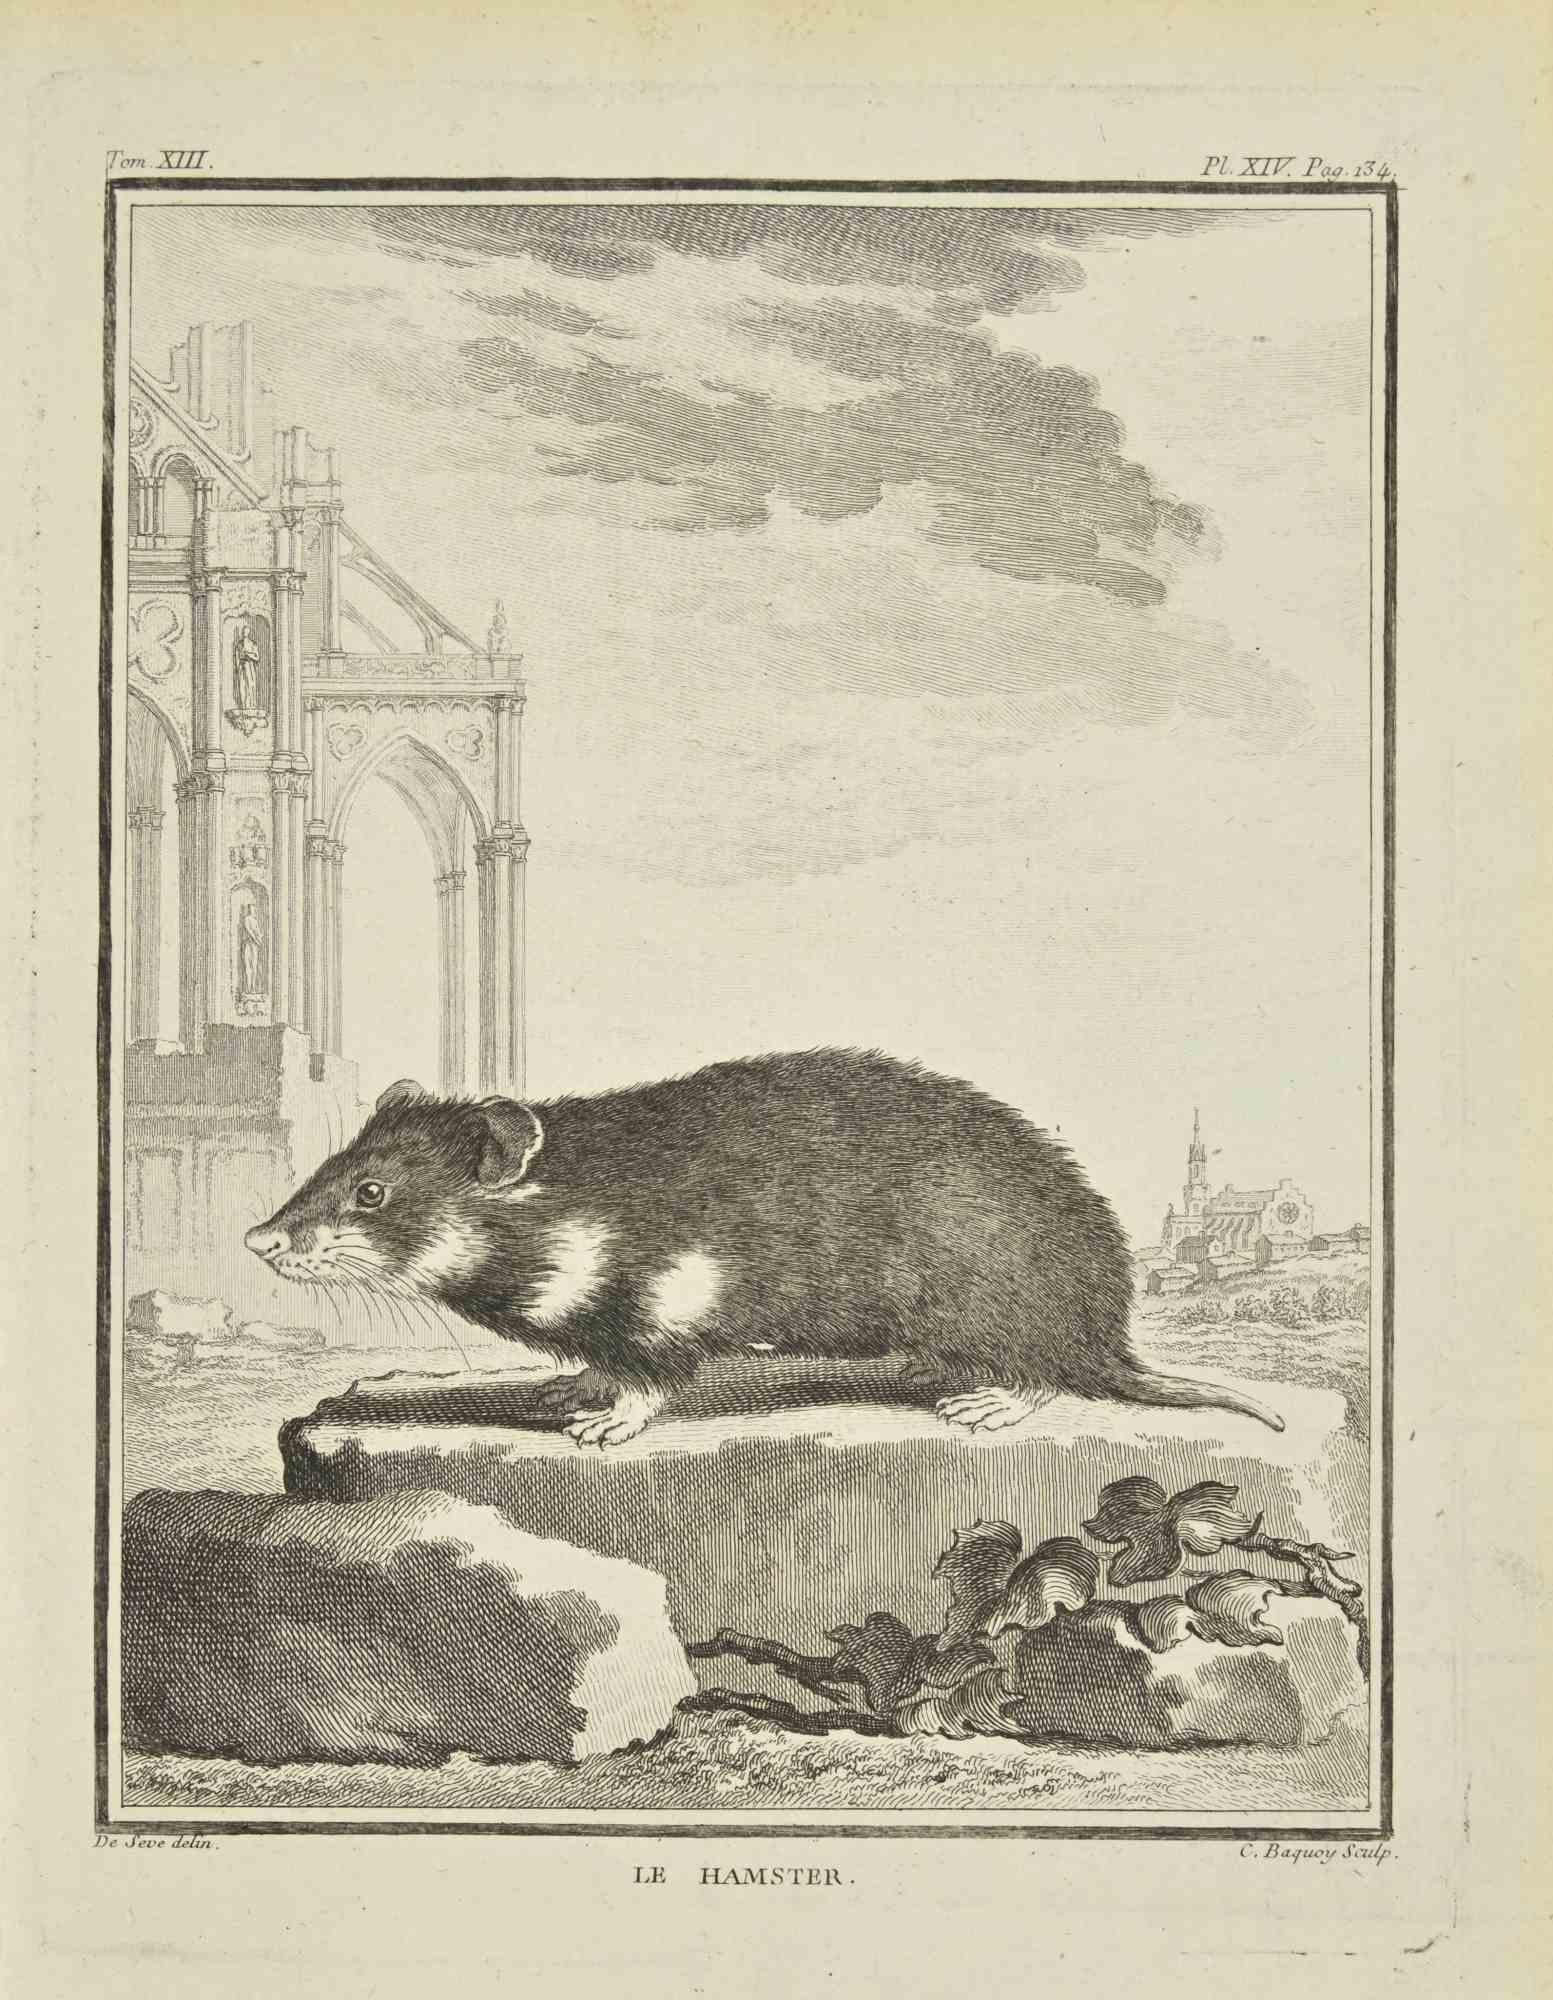 Le Hamster is an etching realized by Pierre Charles Baquoy in 1771.

It belongs to the suite "Histoire naturelle, générale et particulière avec la description du Cabinet du Roi".

Pierre Charles Baquoy (27 July 1759 – 4 February 1829) was a French